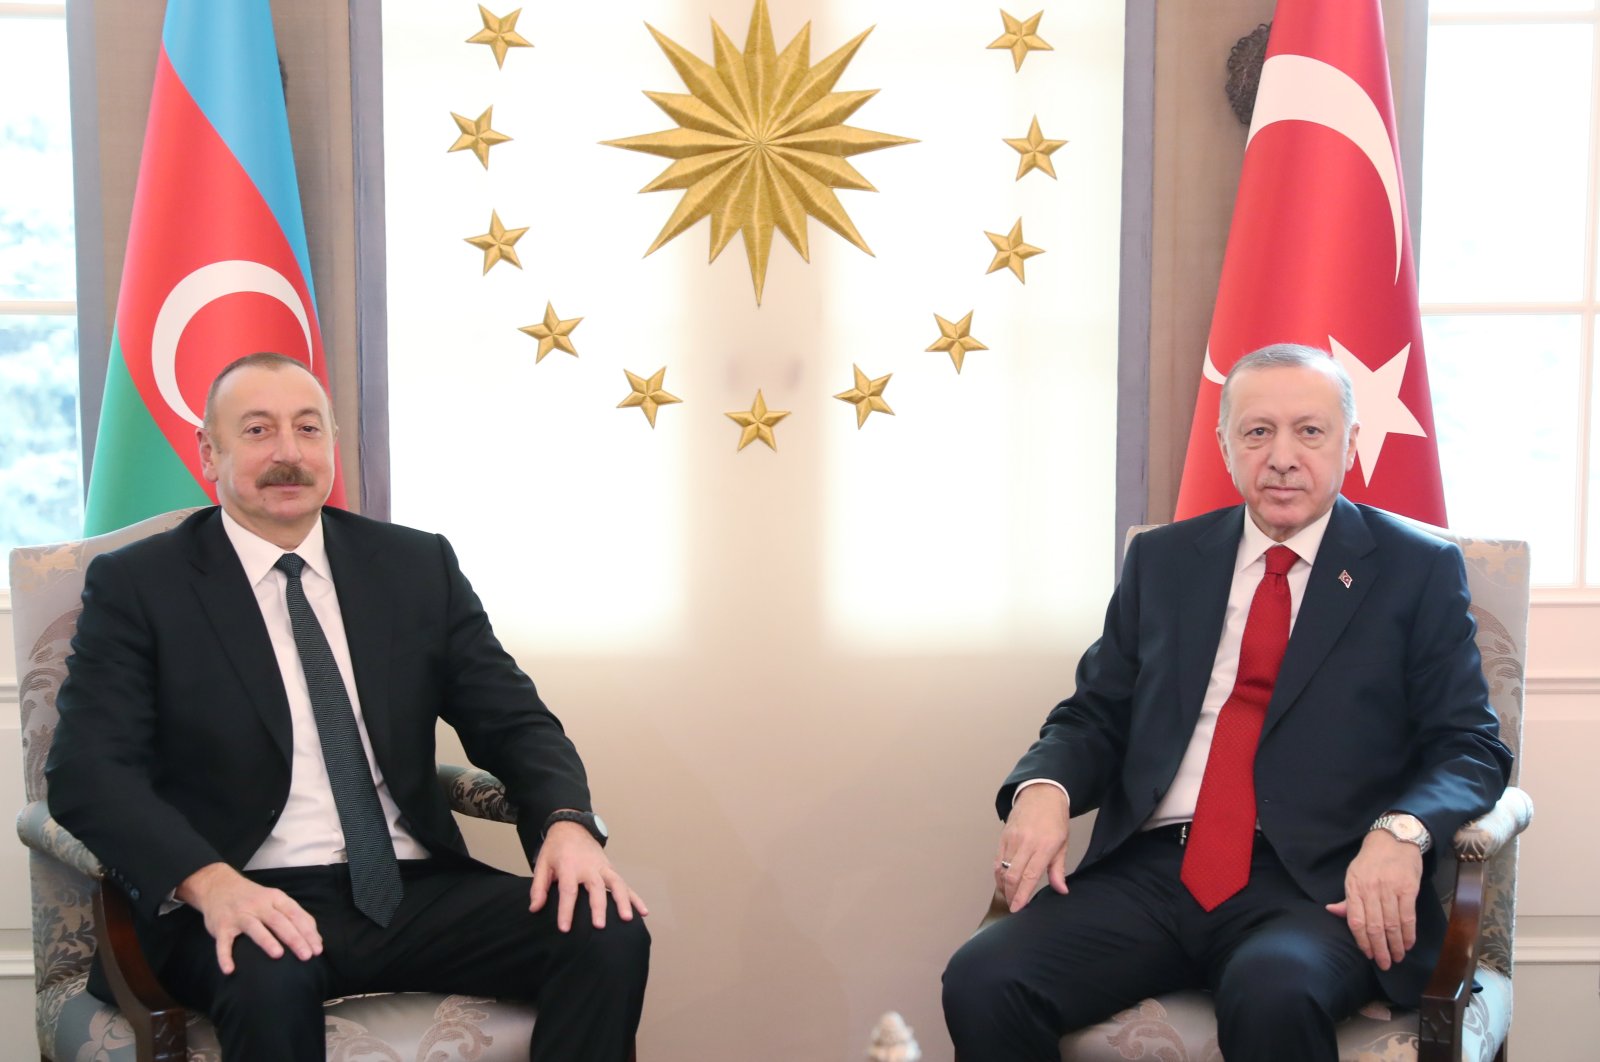 President Recep Tayyip Erdoğan (R) and Azerbaijani President Ilham Aliyev pose for a photo during their meeting at the presidential palace in Ankara, Turkey, March 10, 2022. (EPA Photo)